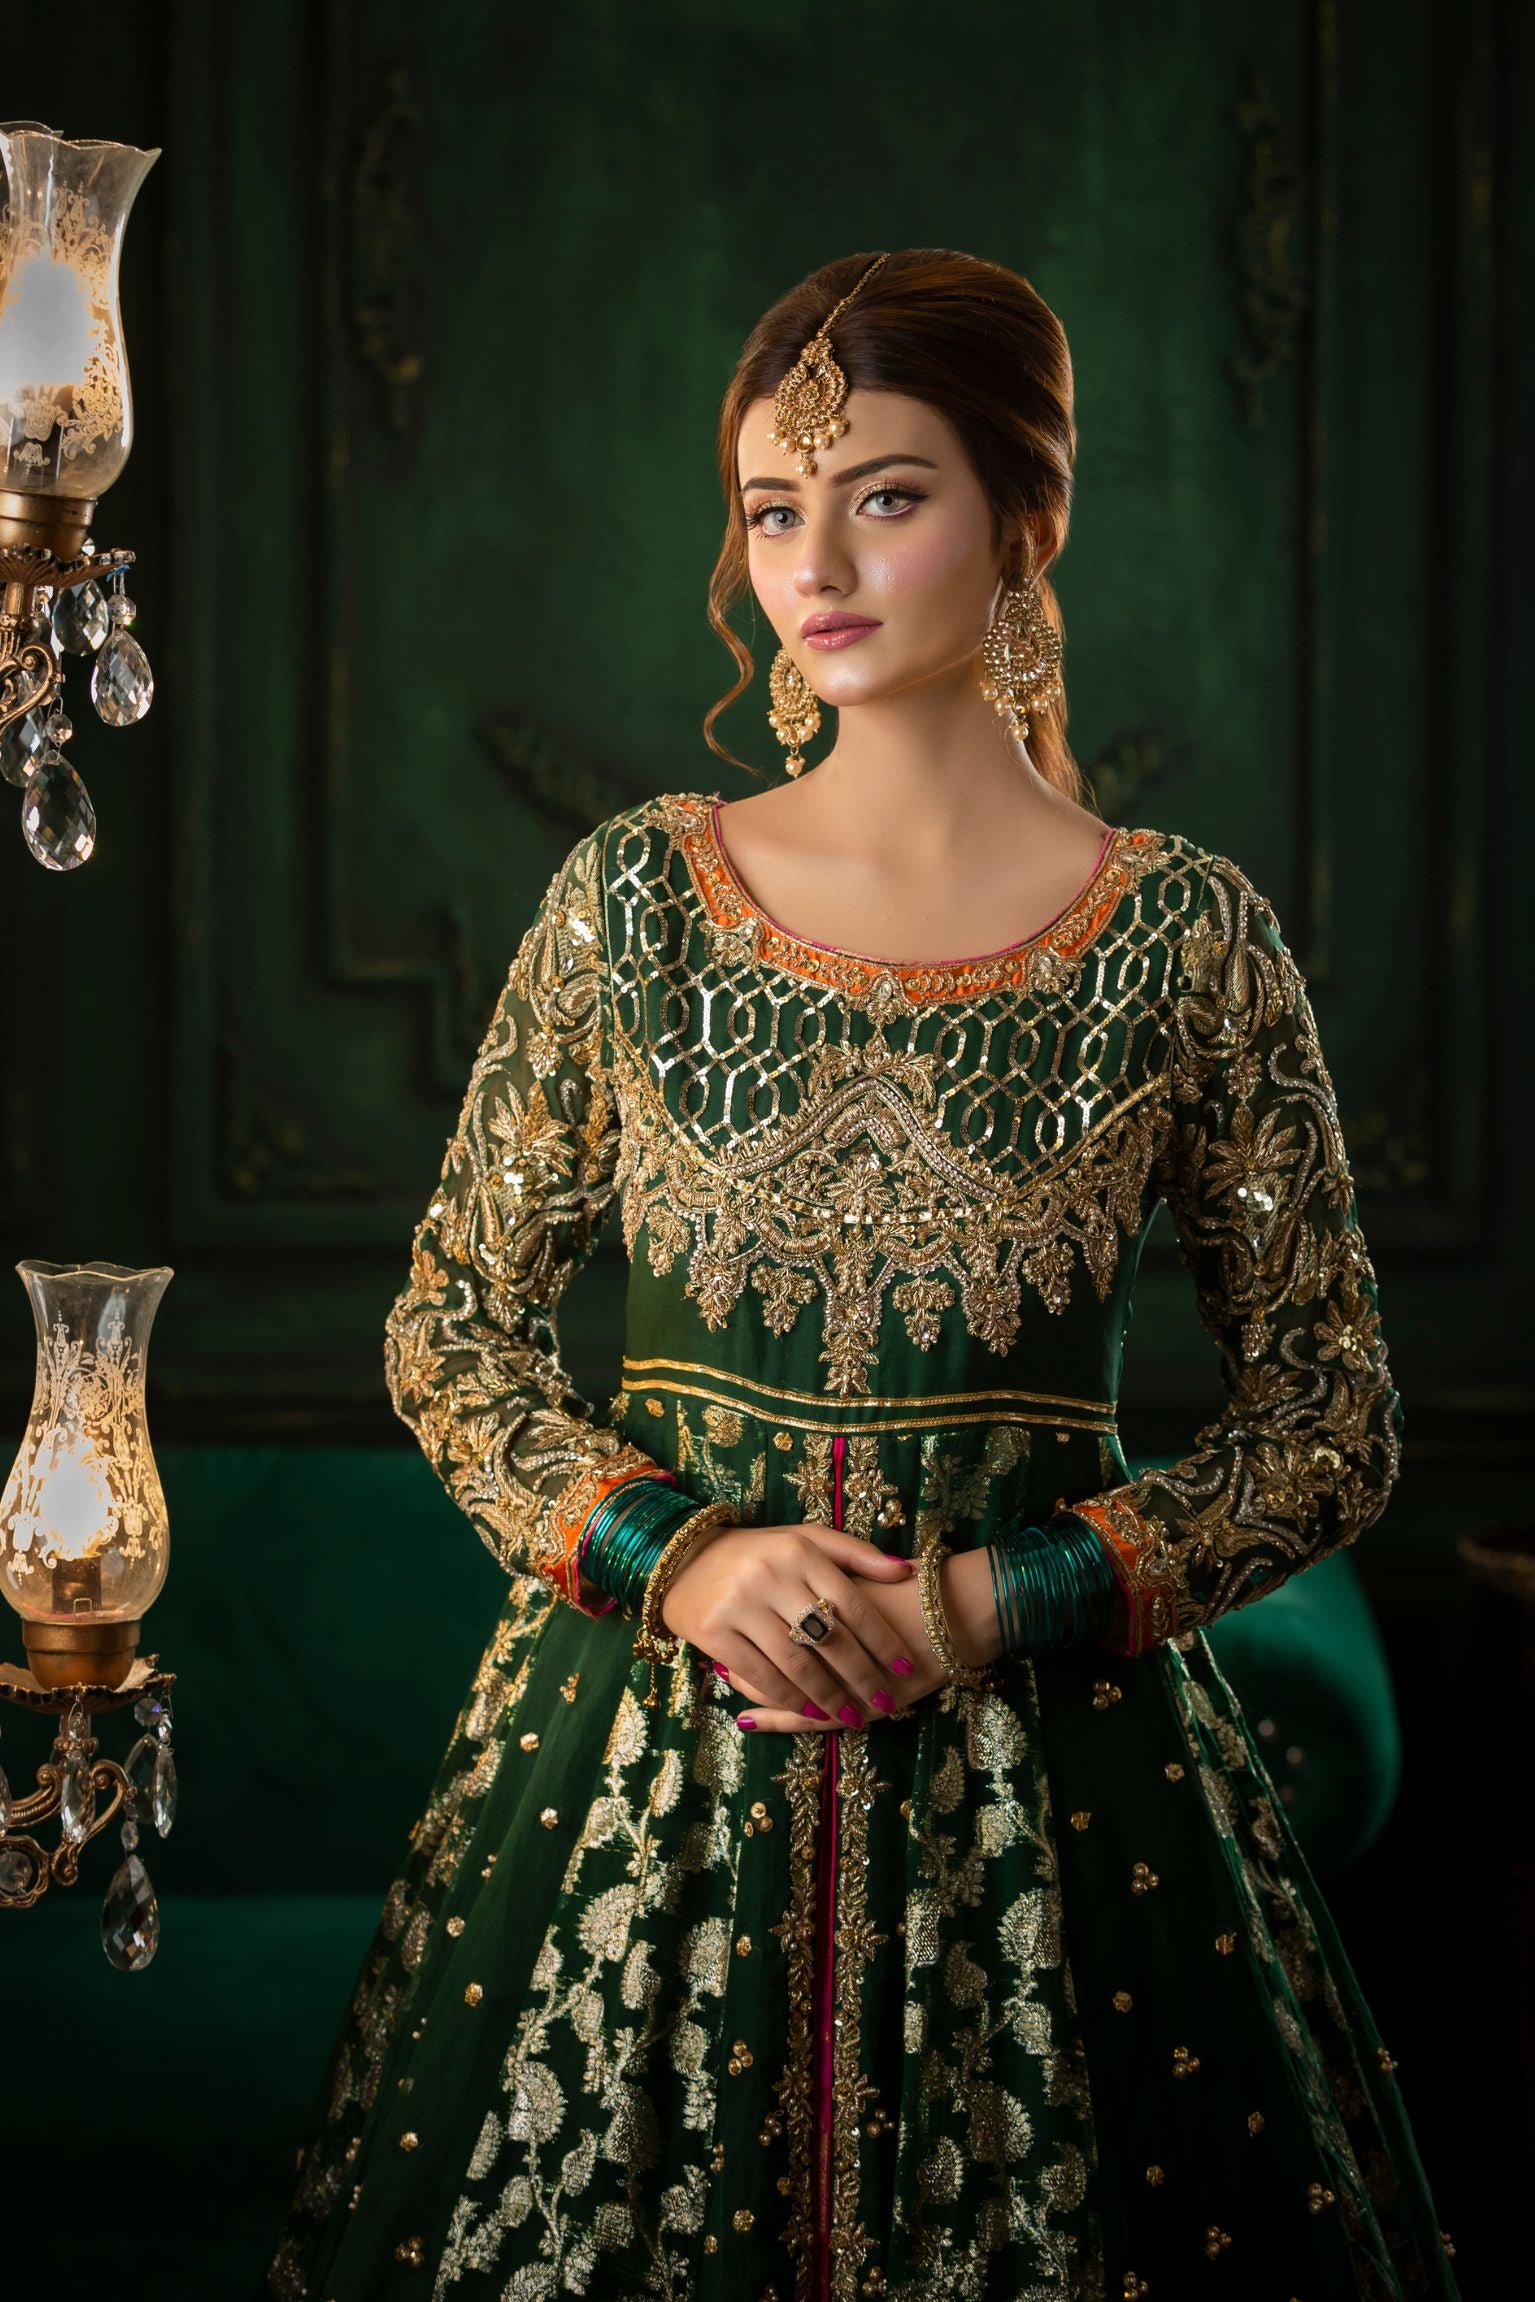 Luxury Emerald Green Mehndi Outfit Henna Dress – Sultan Dress